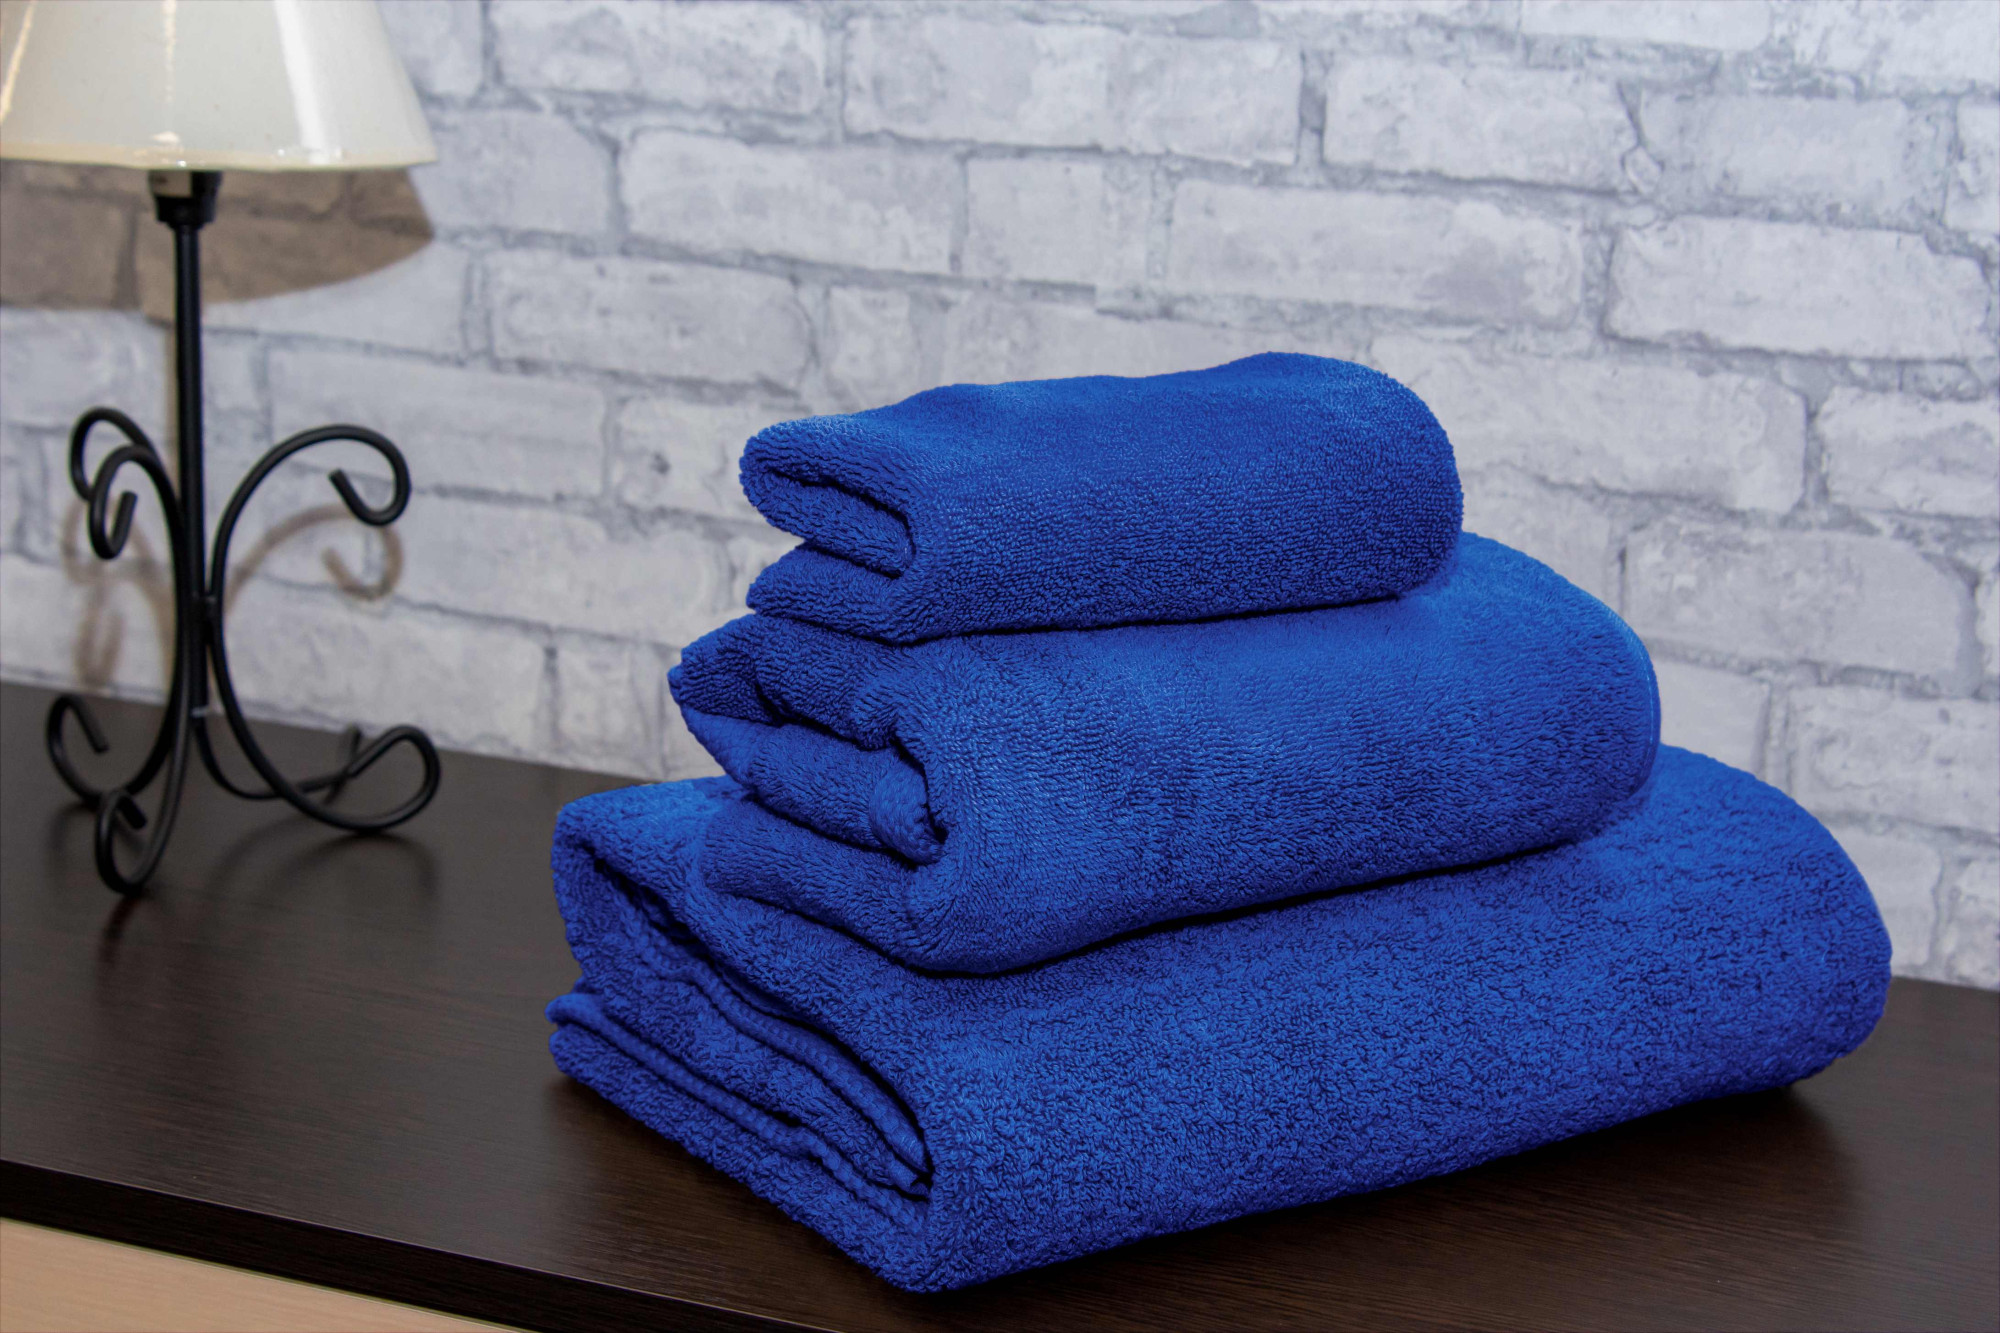 Terry towel 70X140, navy blue, 100% cotton